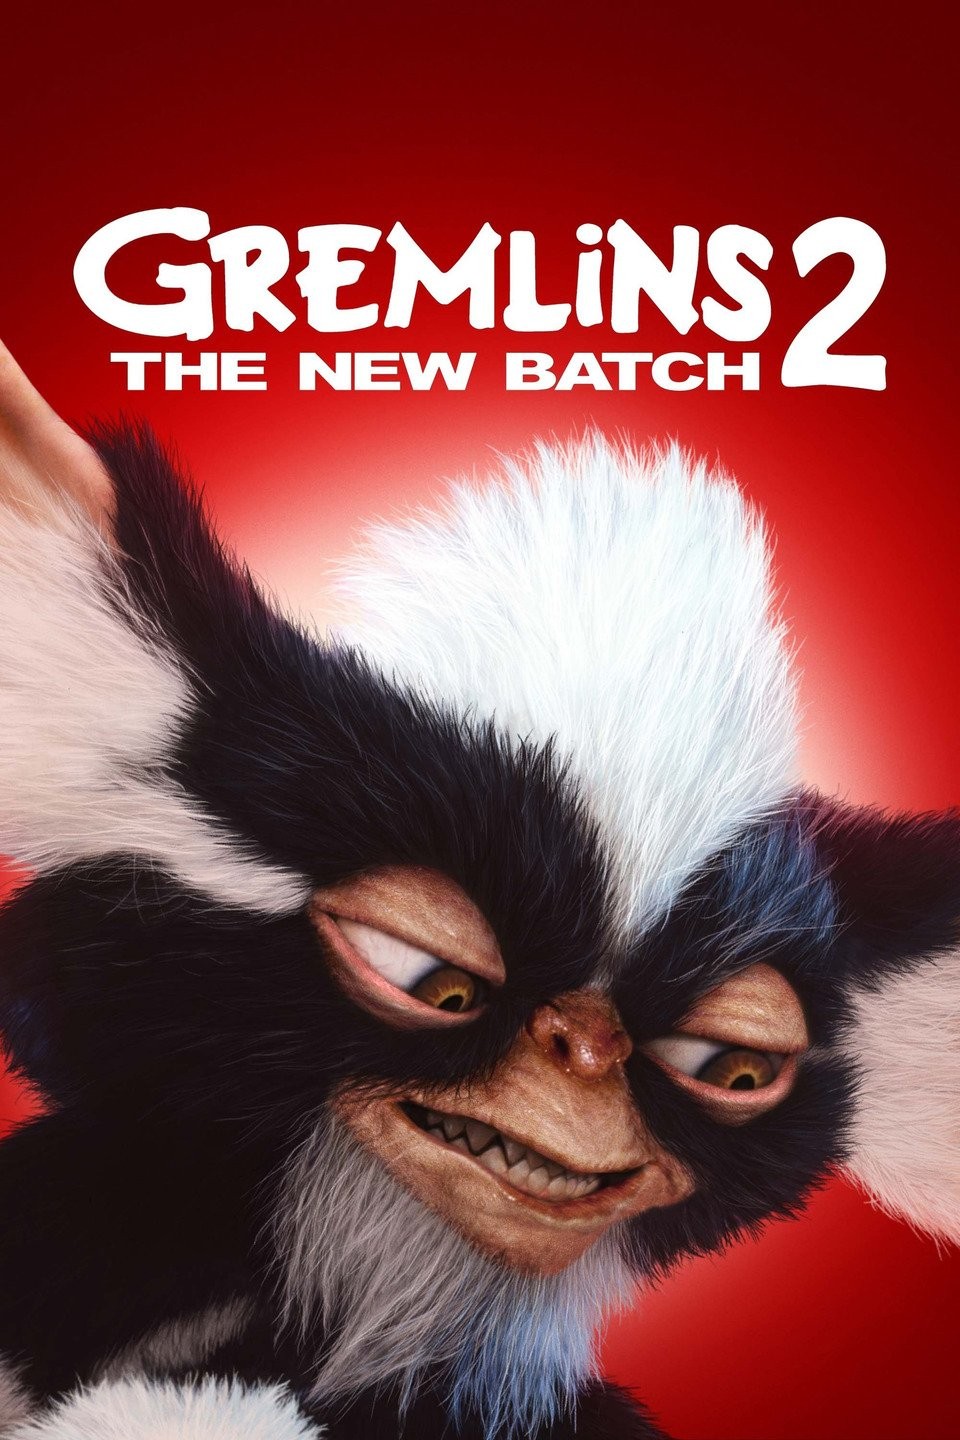 Joe Dante made a Gremlins prequel show because Gremlins 2 is